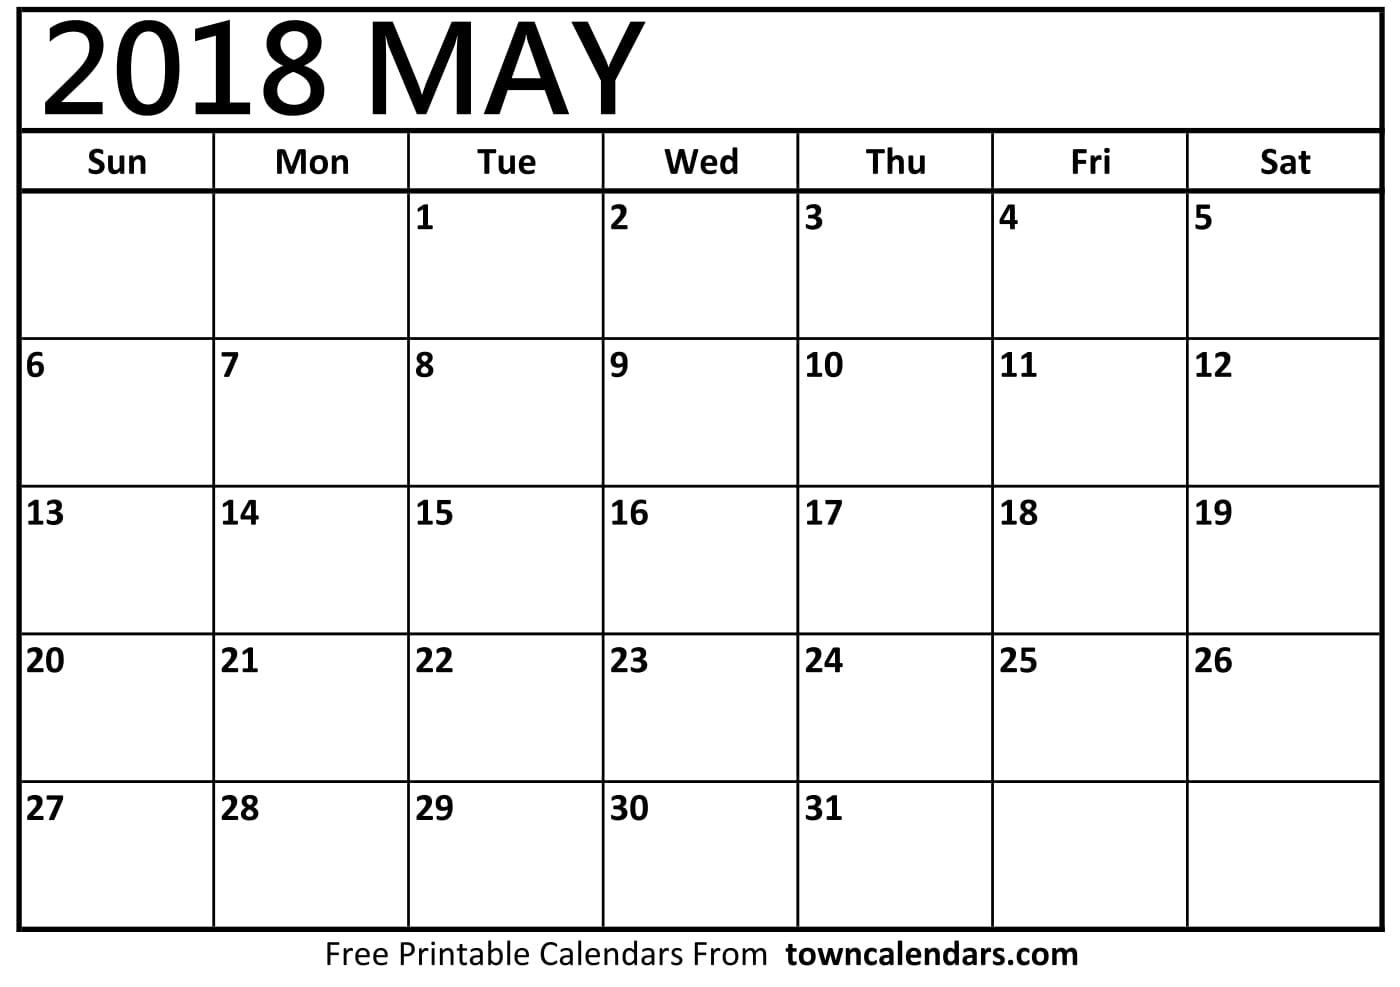 printable-may-2018-calendar-towncalendars